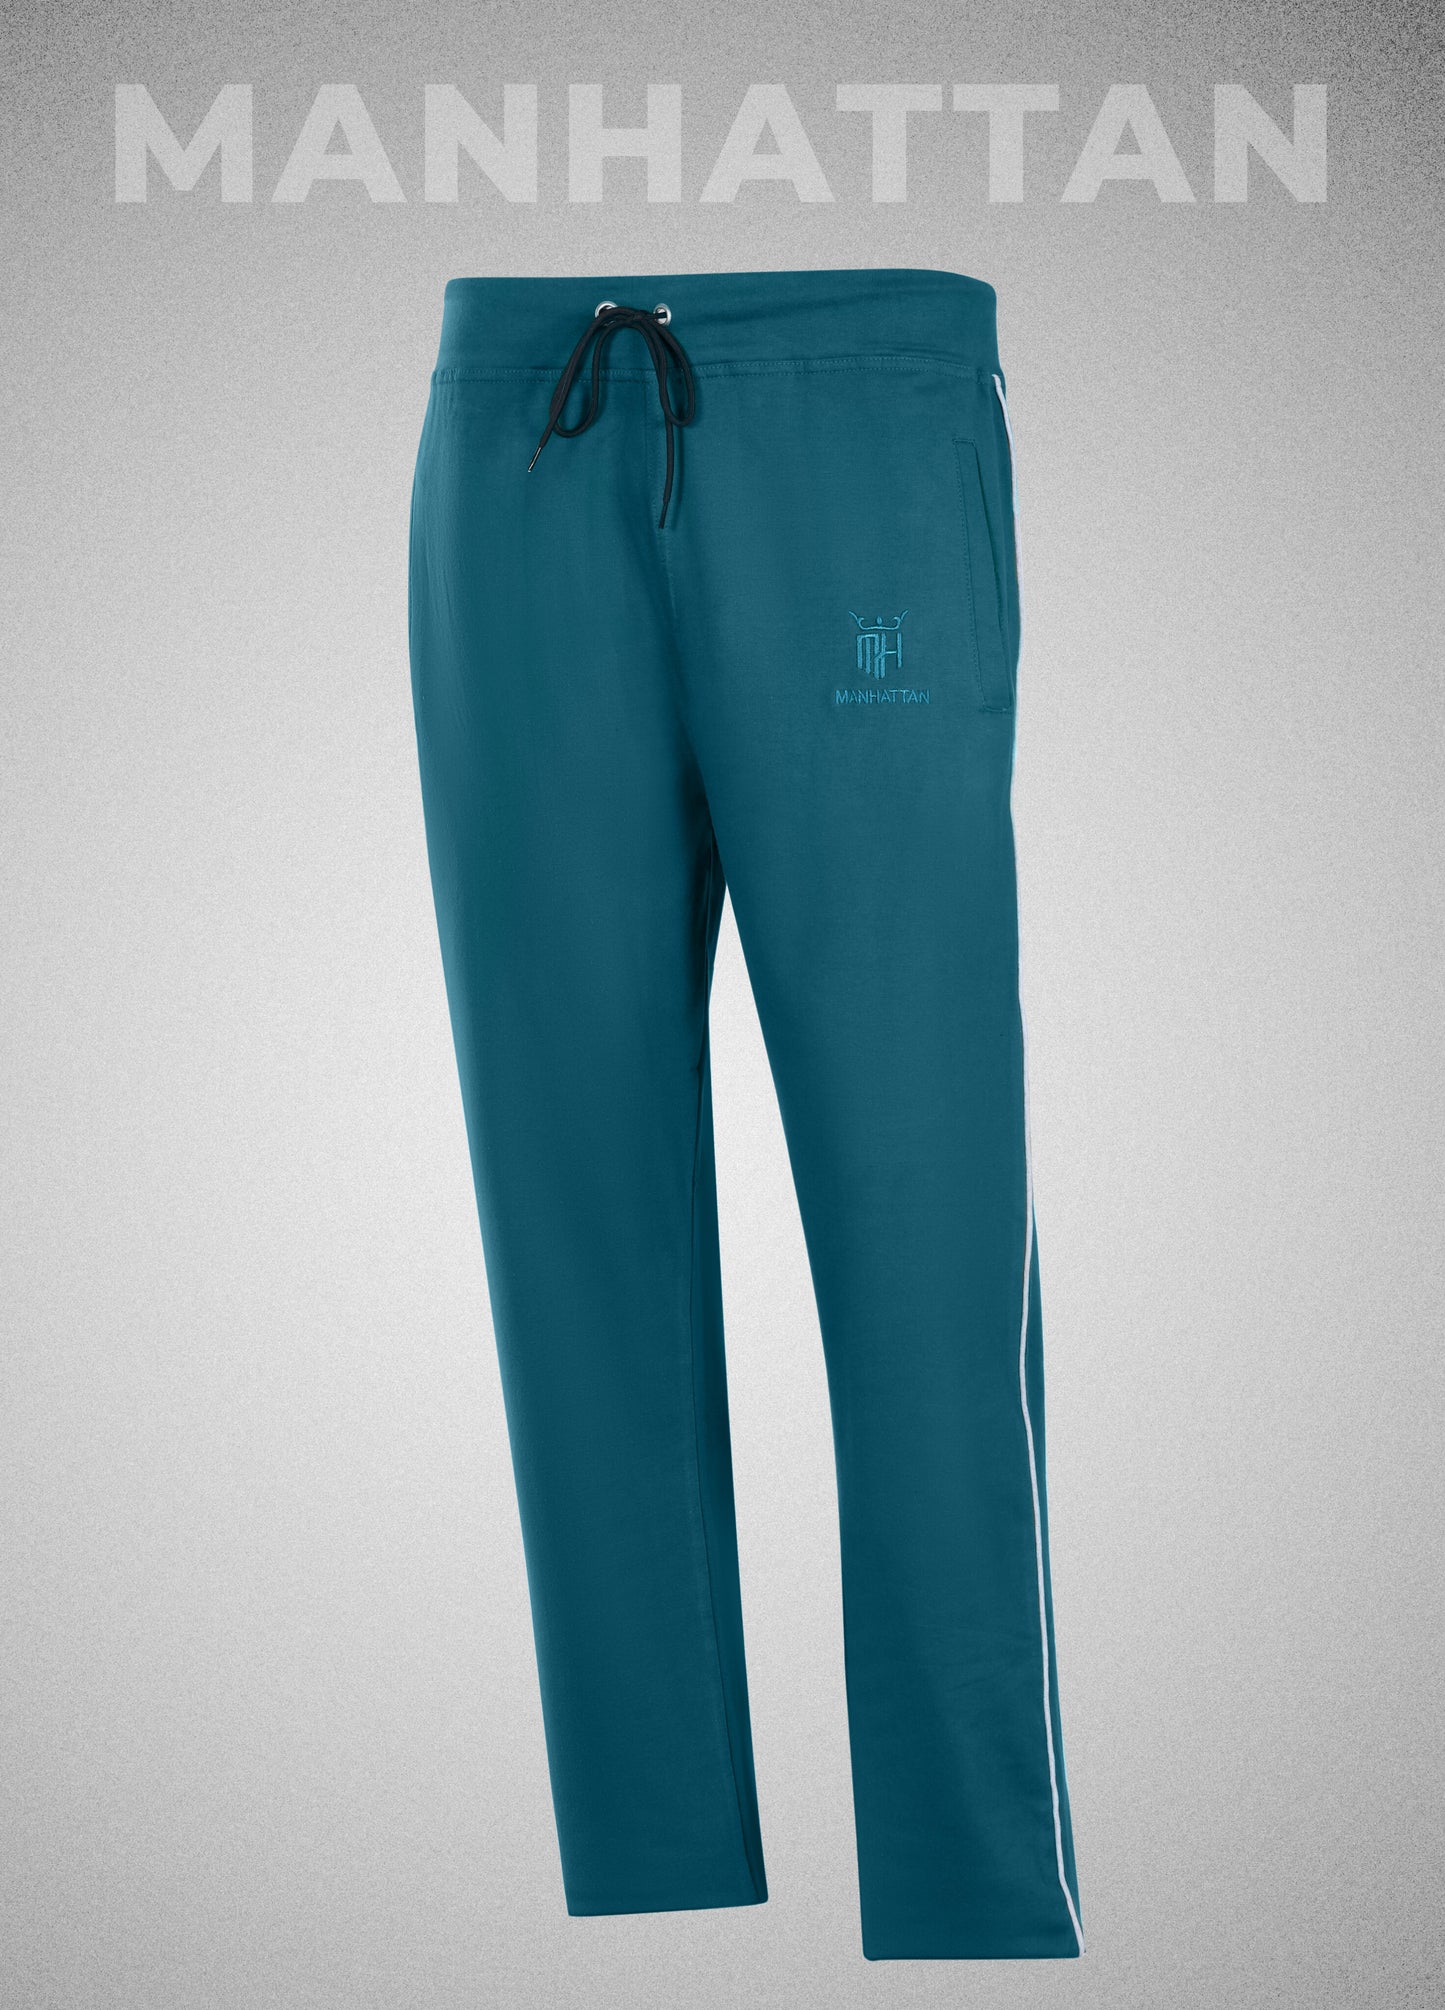 Premium Cotton Teal Blue Track Pant Regular Fit